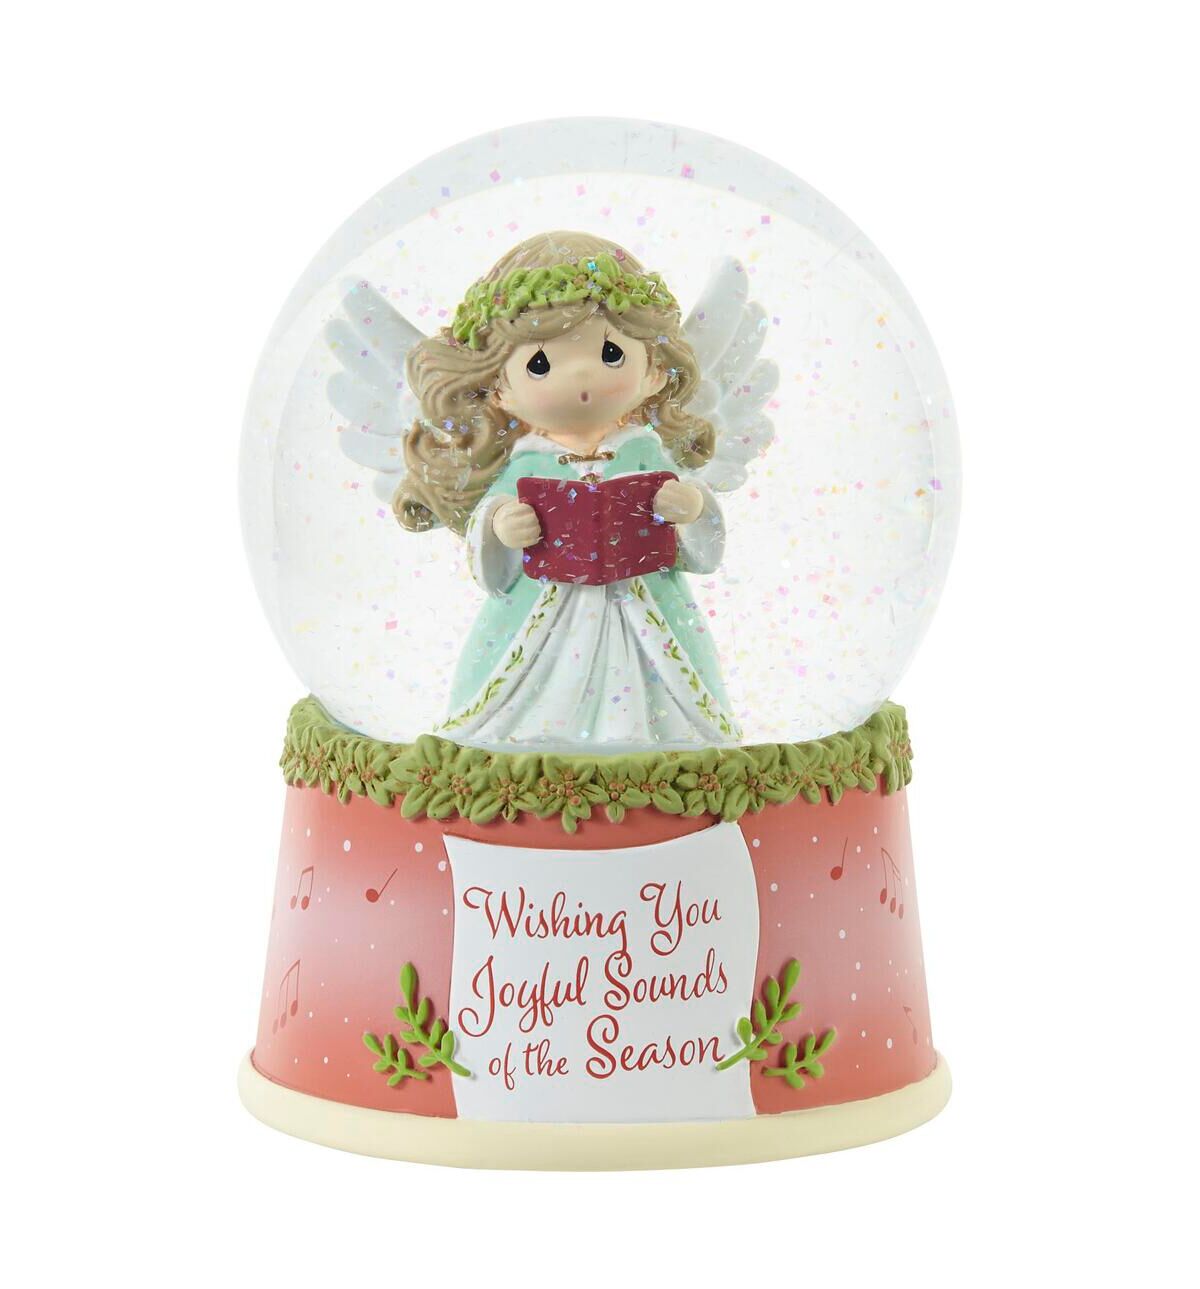 Precious Moments Wishing You Joyful Sounds of The Season Annual Angel Resin, Glass Musical Snow Globe - Multicolored